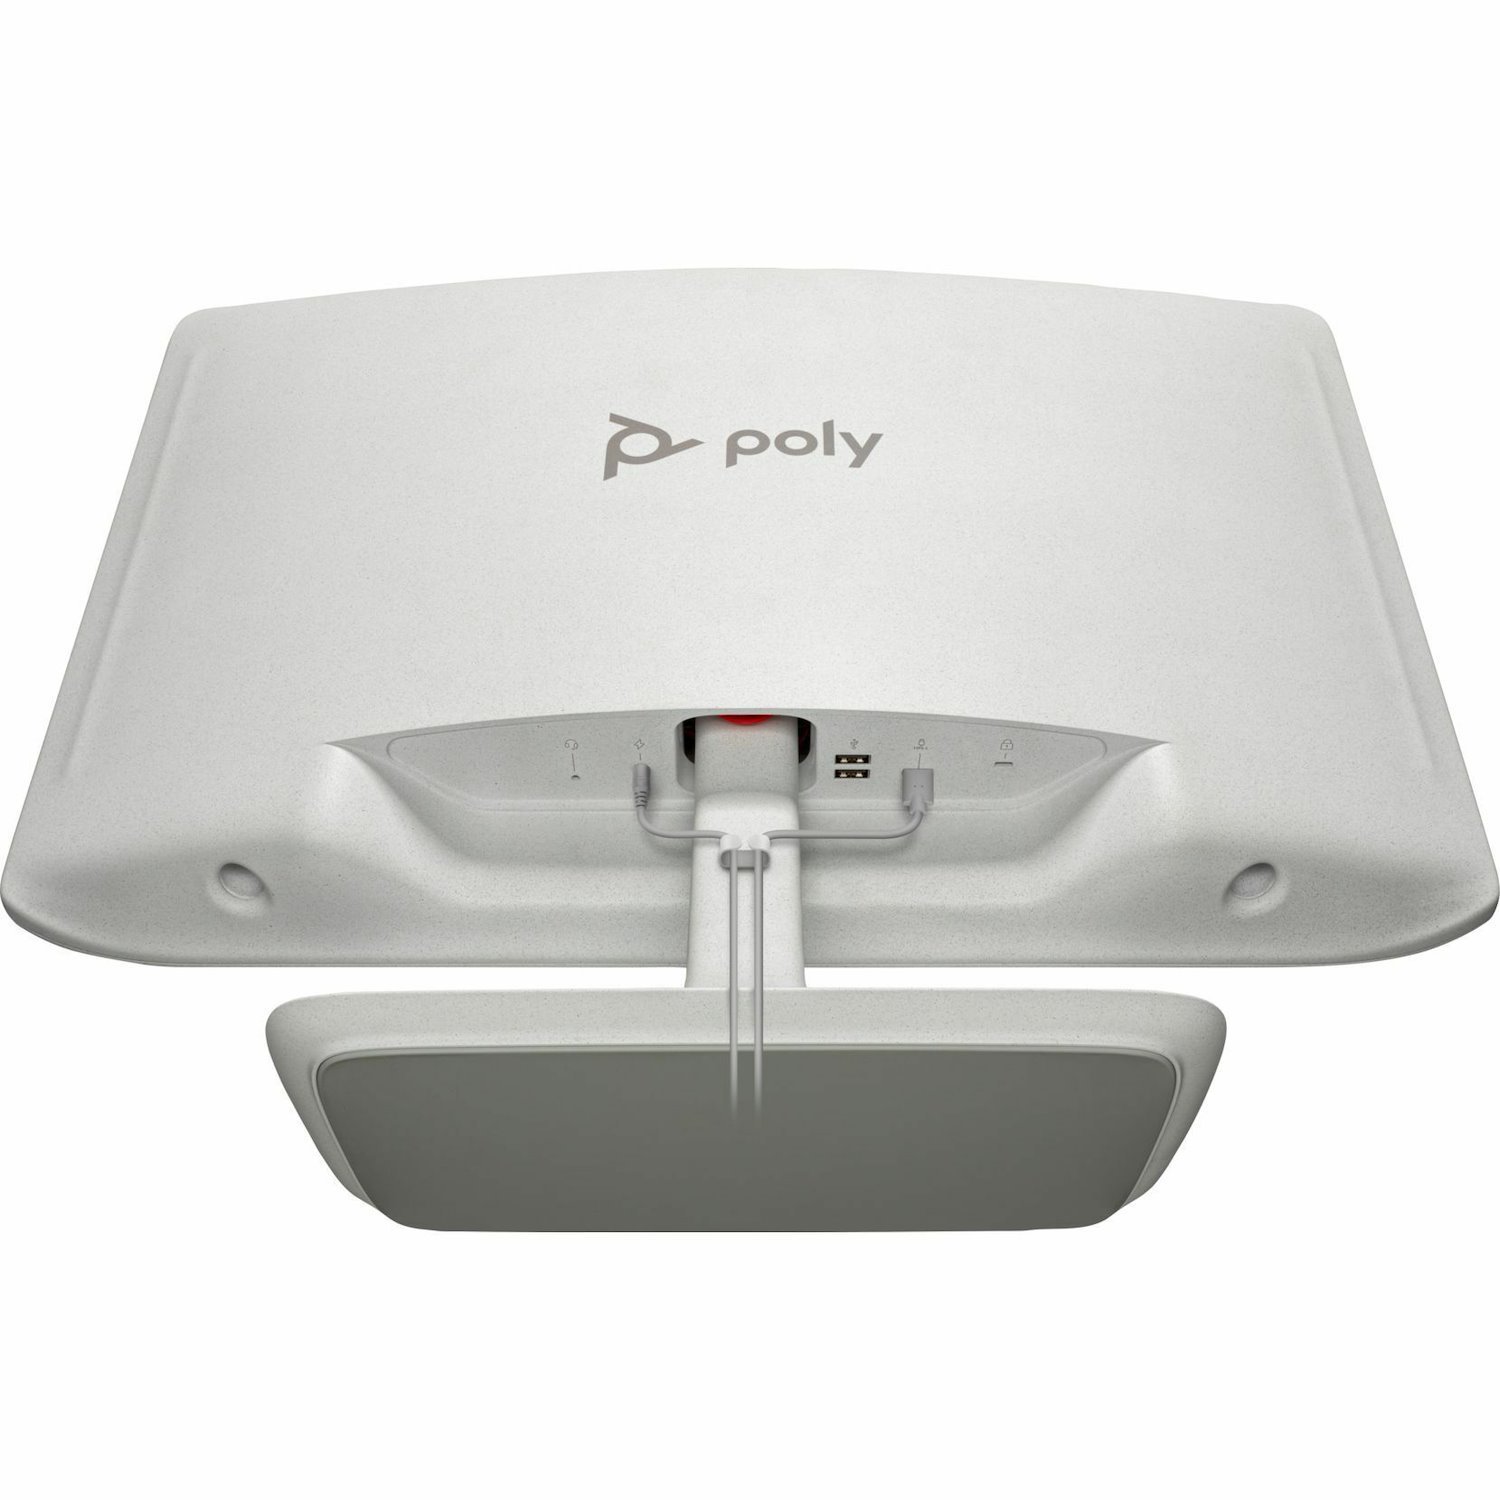 Poly Studio P P21 22" Class Webcam Full HD LCD Monitor - 16:9